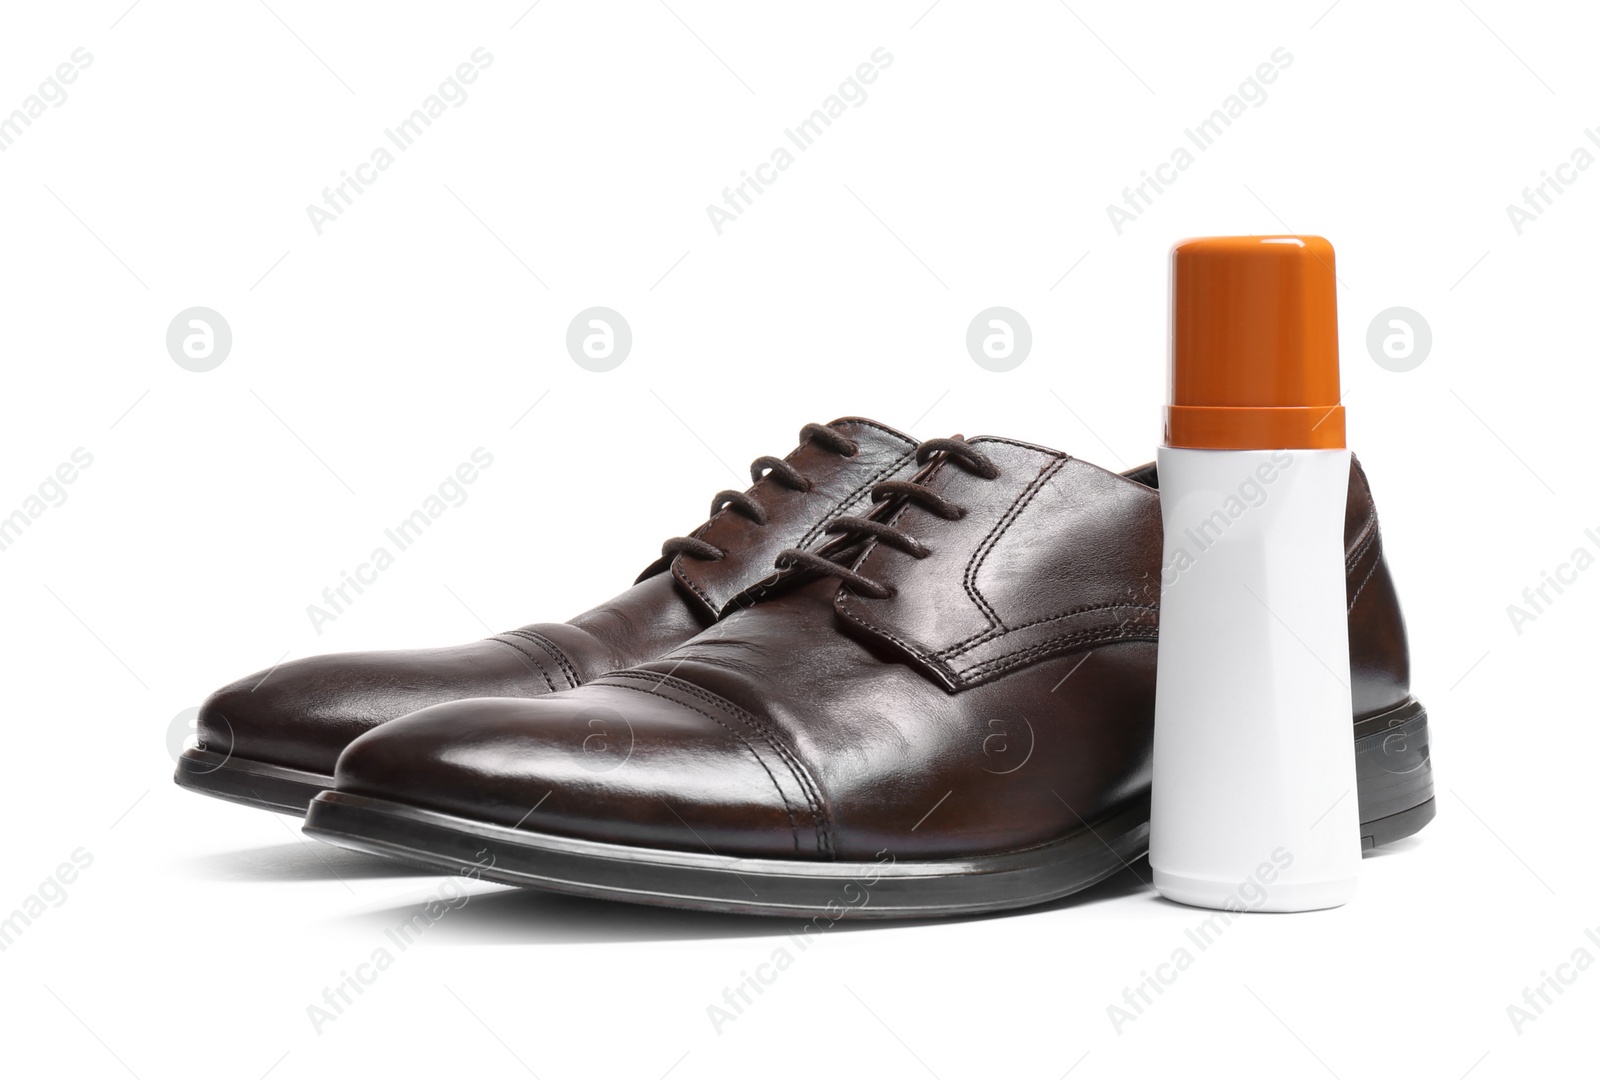 Photo of Stylish men's shoes and cream on white background